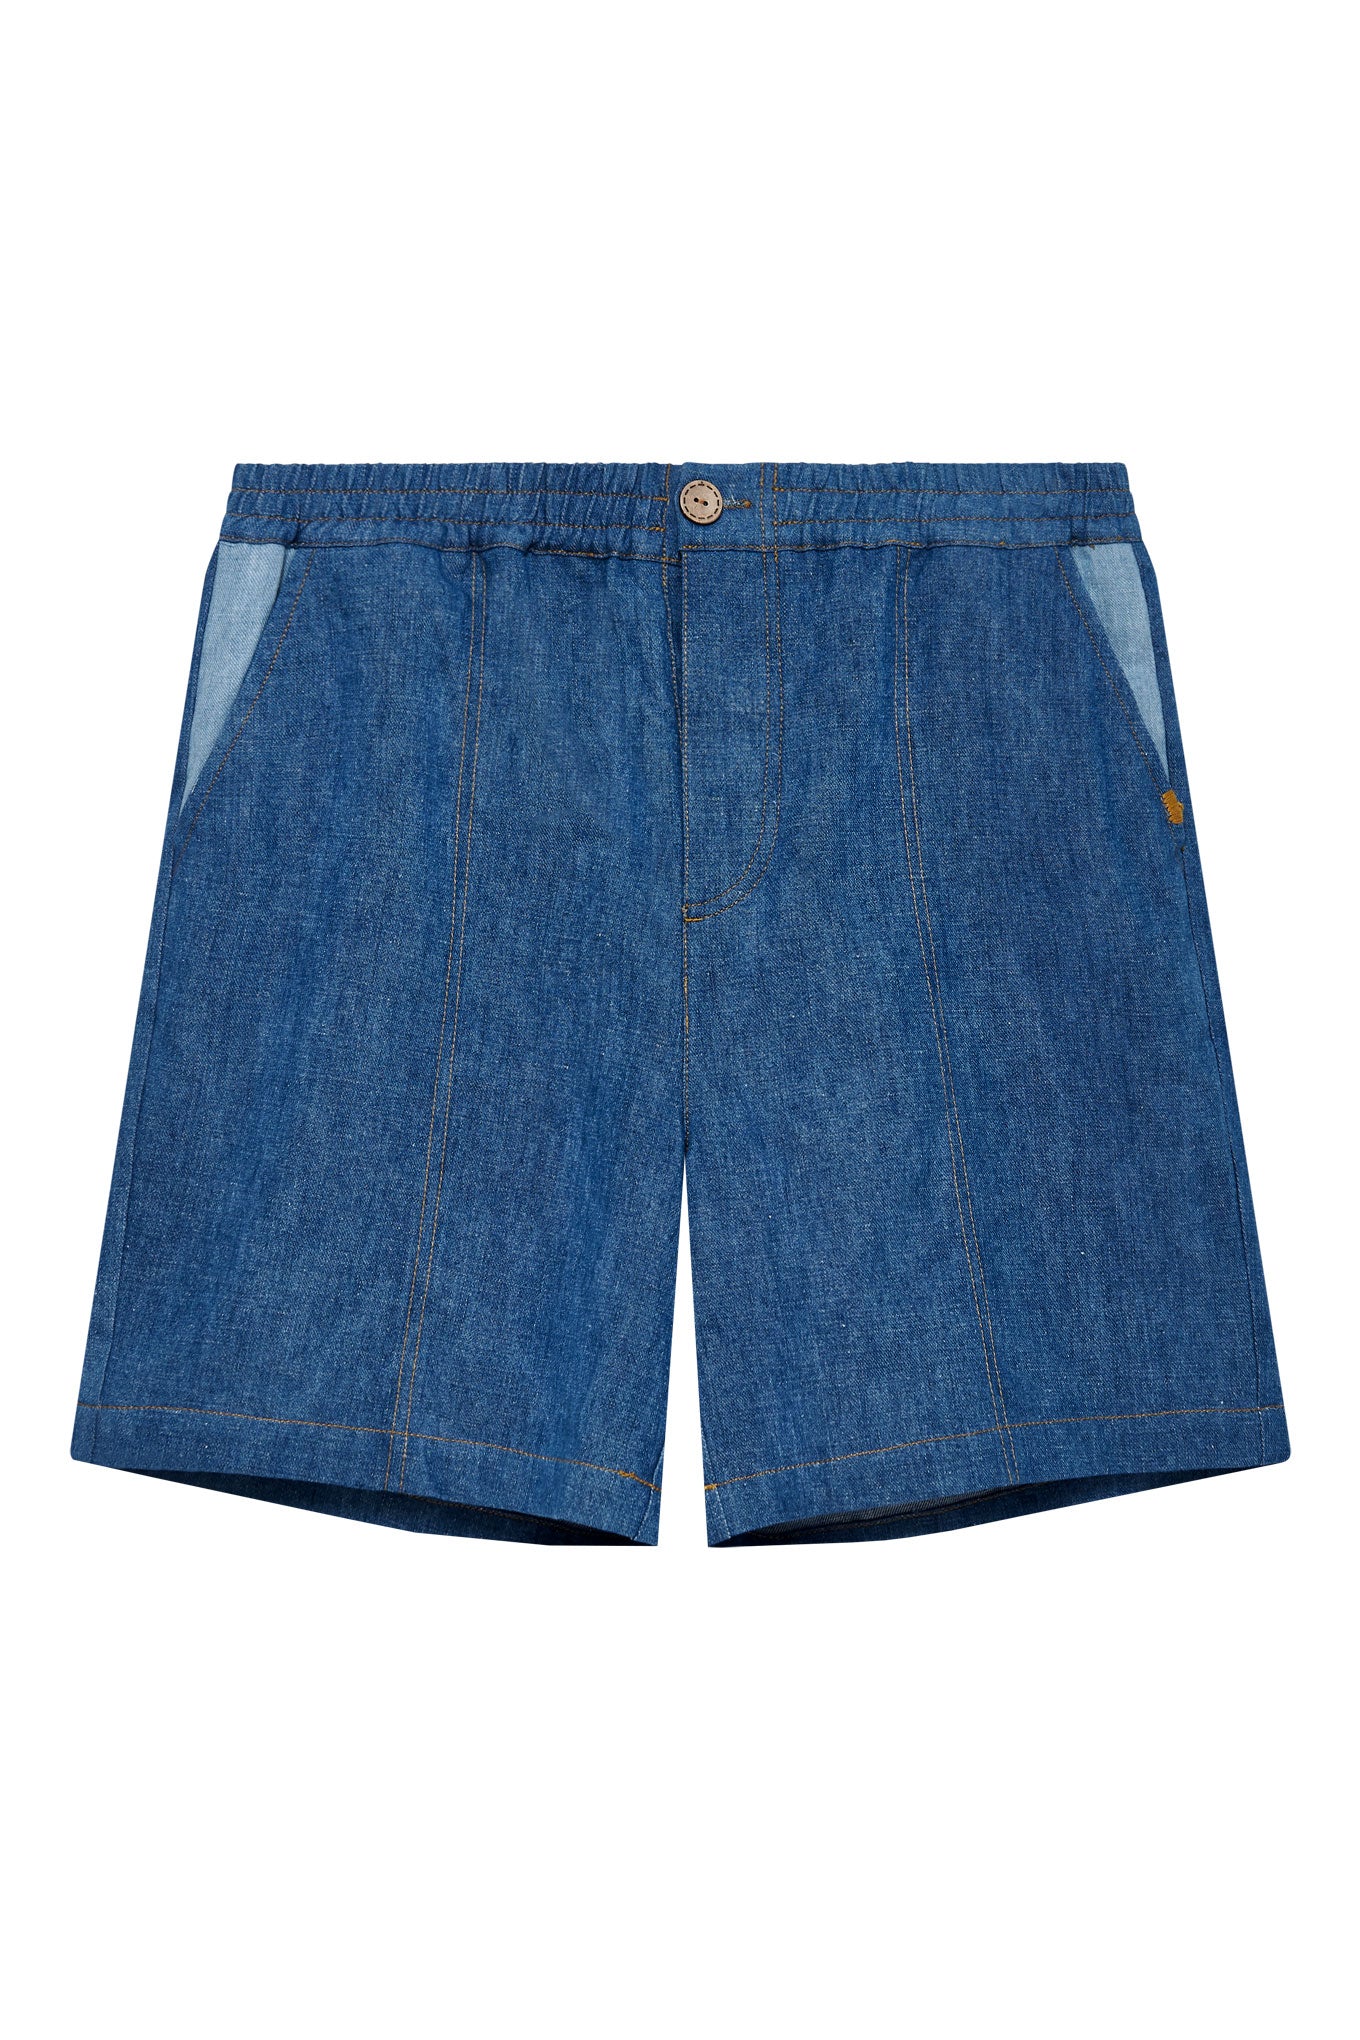 Komodo Men's Mario - Linen Shorts Blue Patchwork